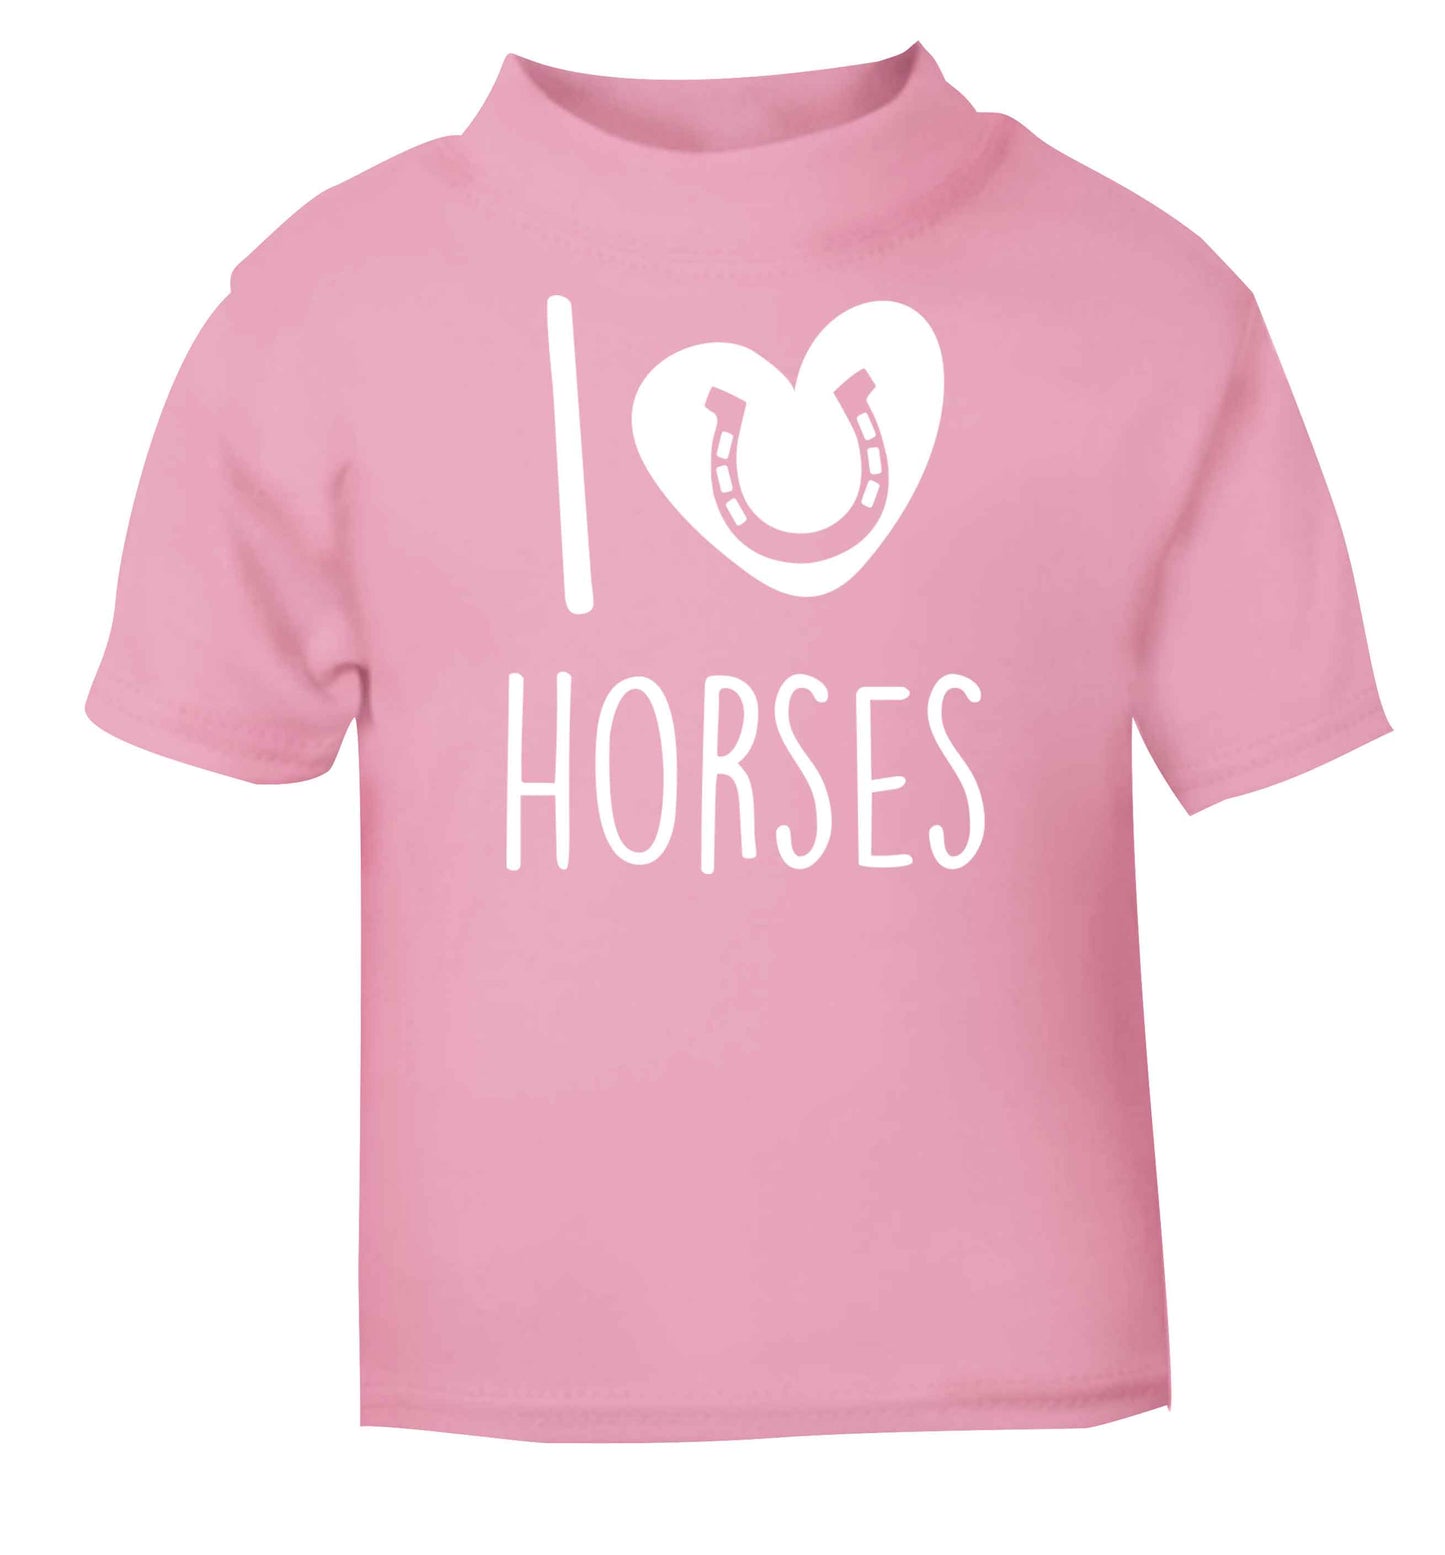 I love horses light pink baby toddler Tshirt 2 Years